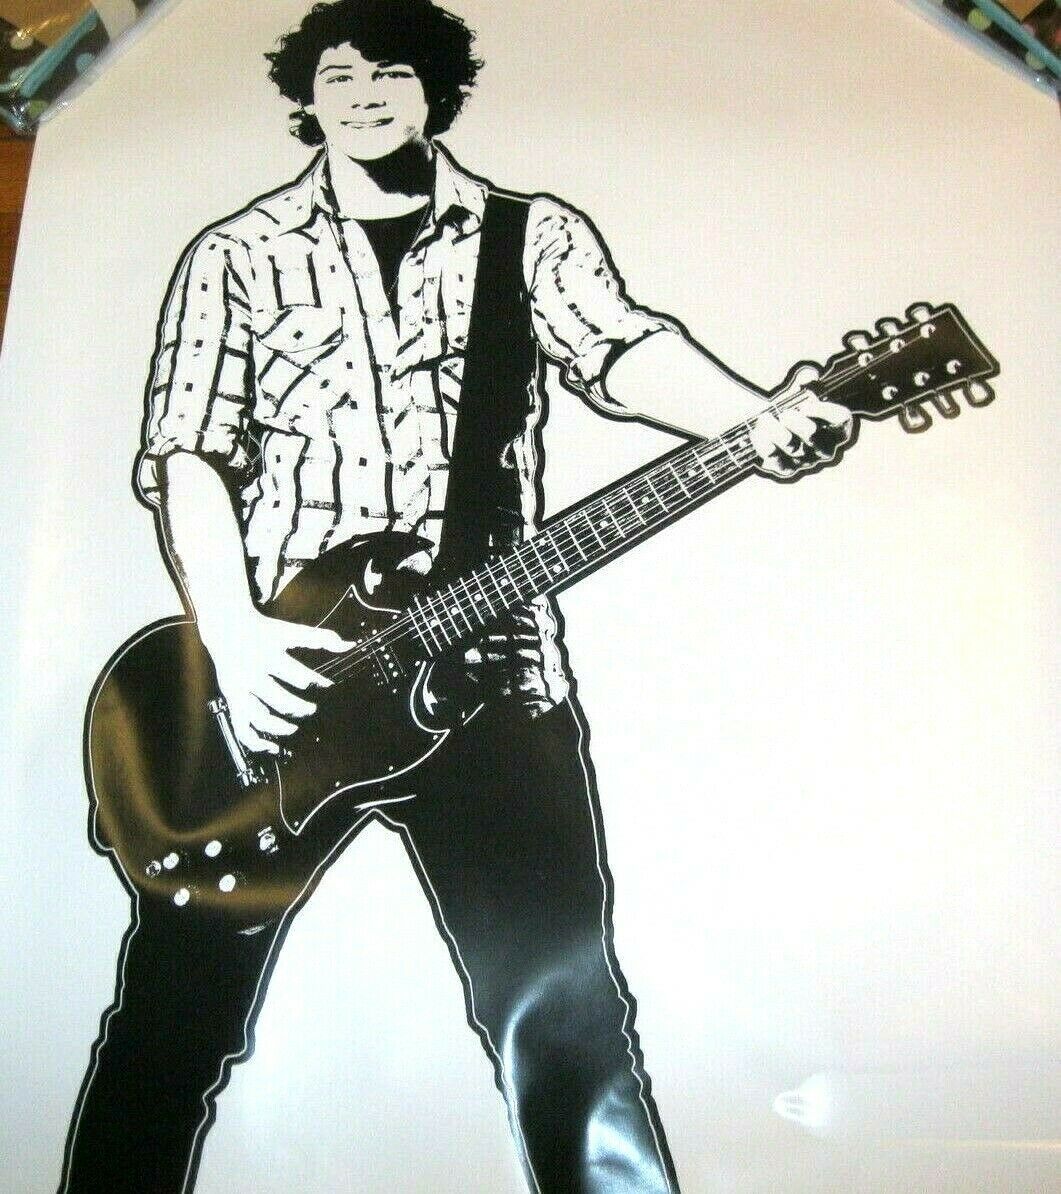 Pottery Barn Teen Nick Jonas w/ Guitar Camp Rock  Wall Decal Mural  21 w x 37 H - $26.71